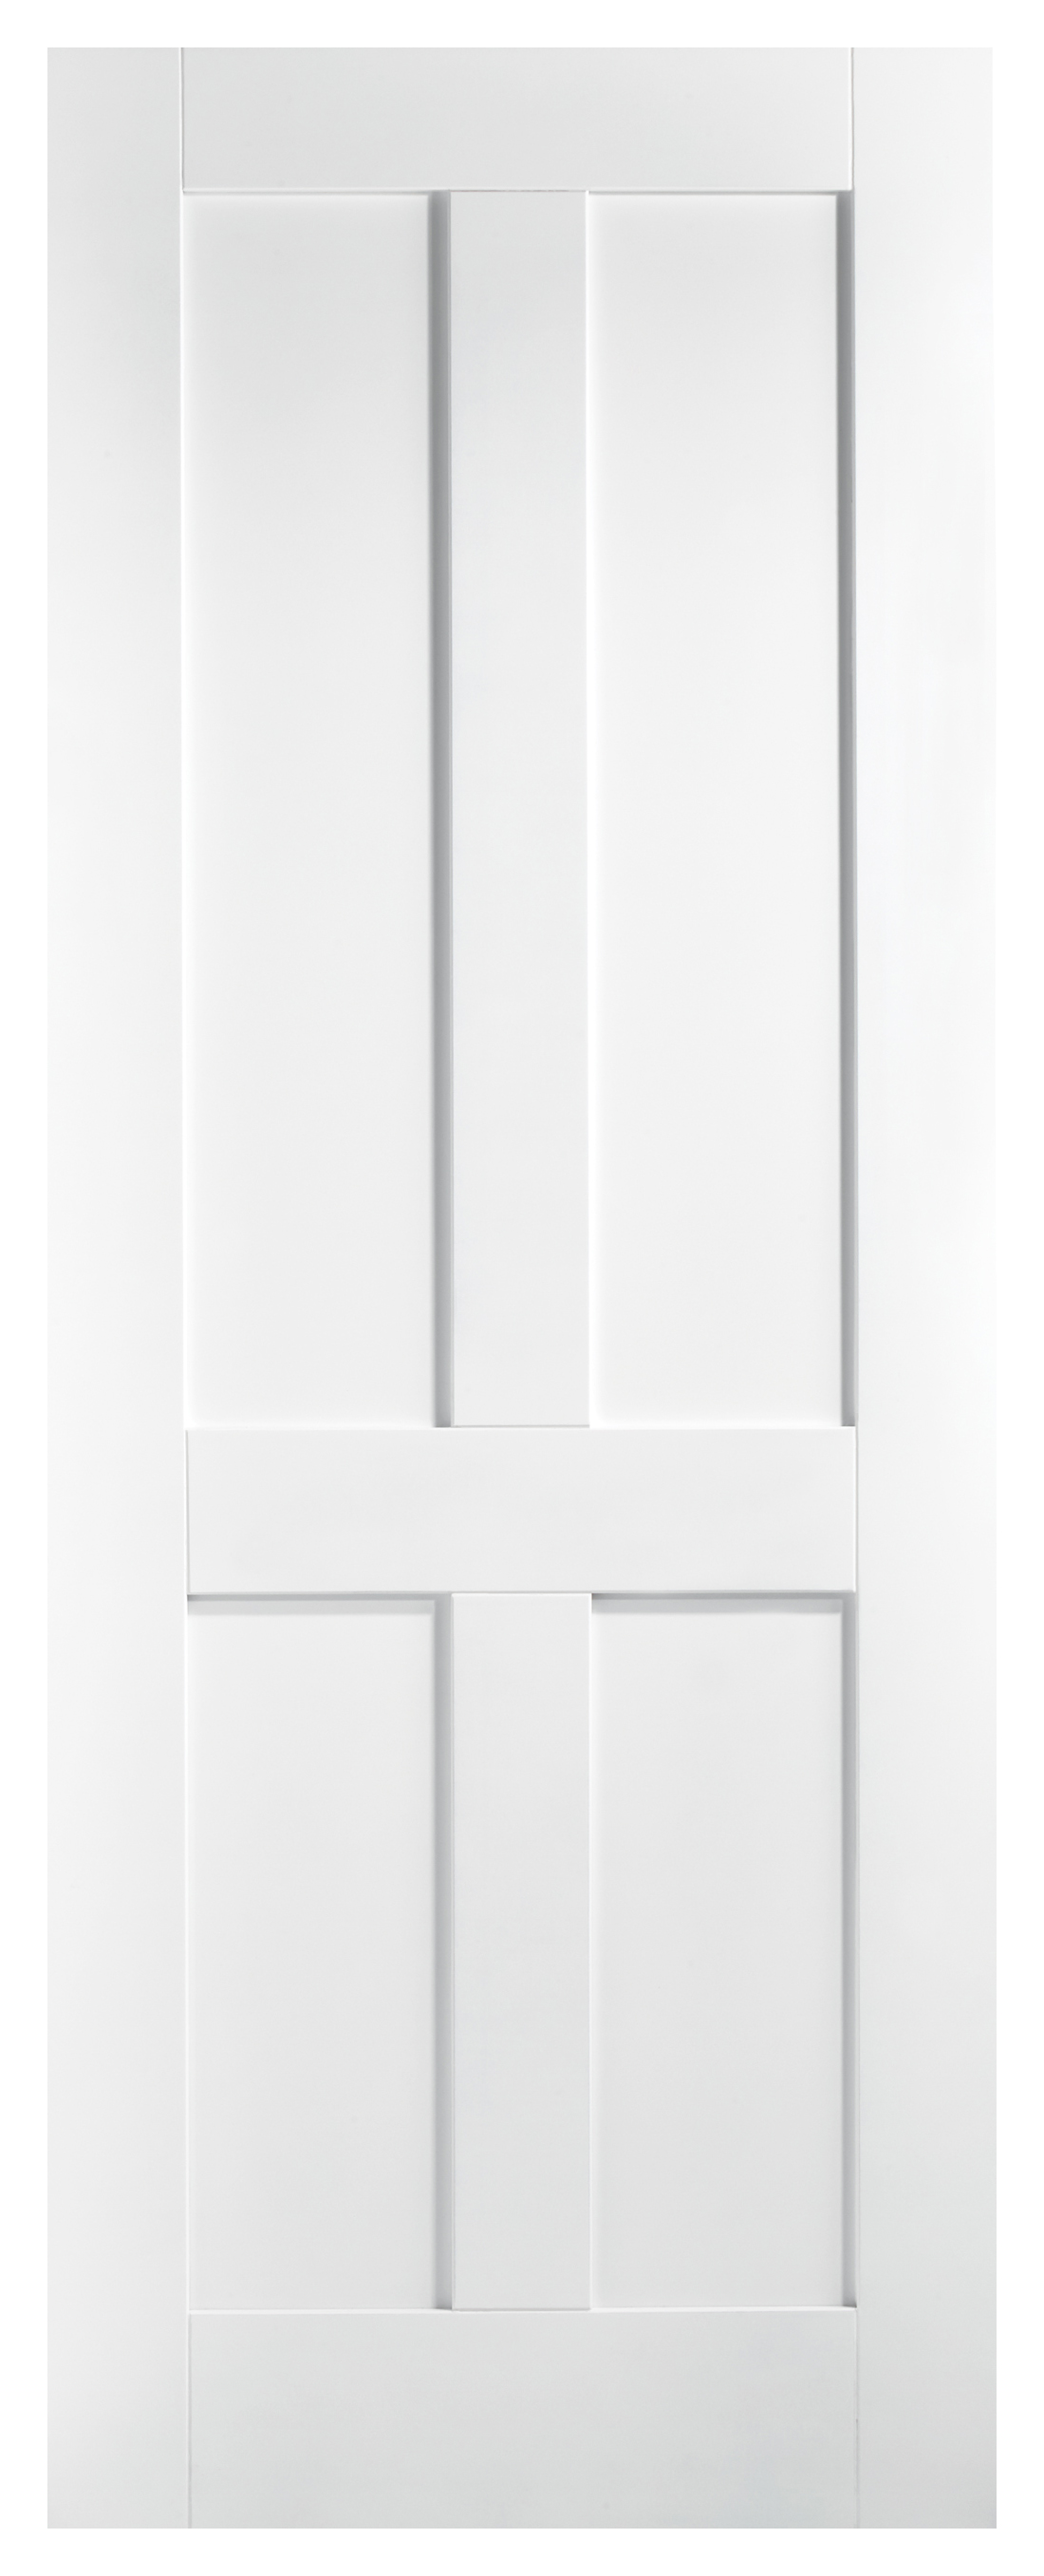 Image of LPD Internal London 4 Panel Primed White FD30 Fire Door - 686 x 1981mm